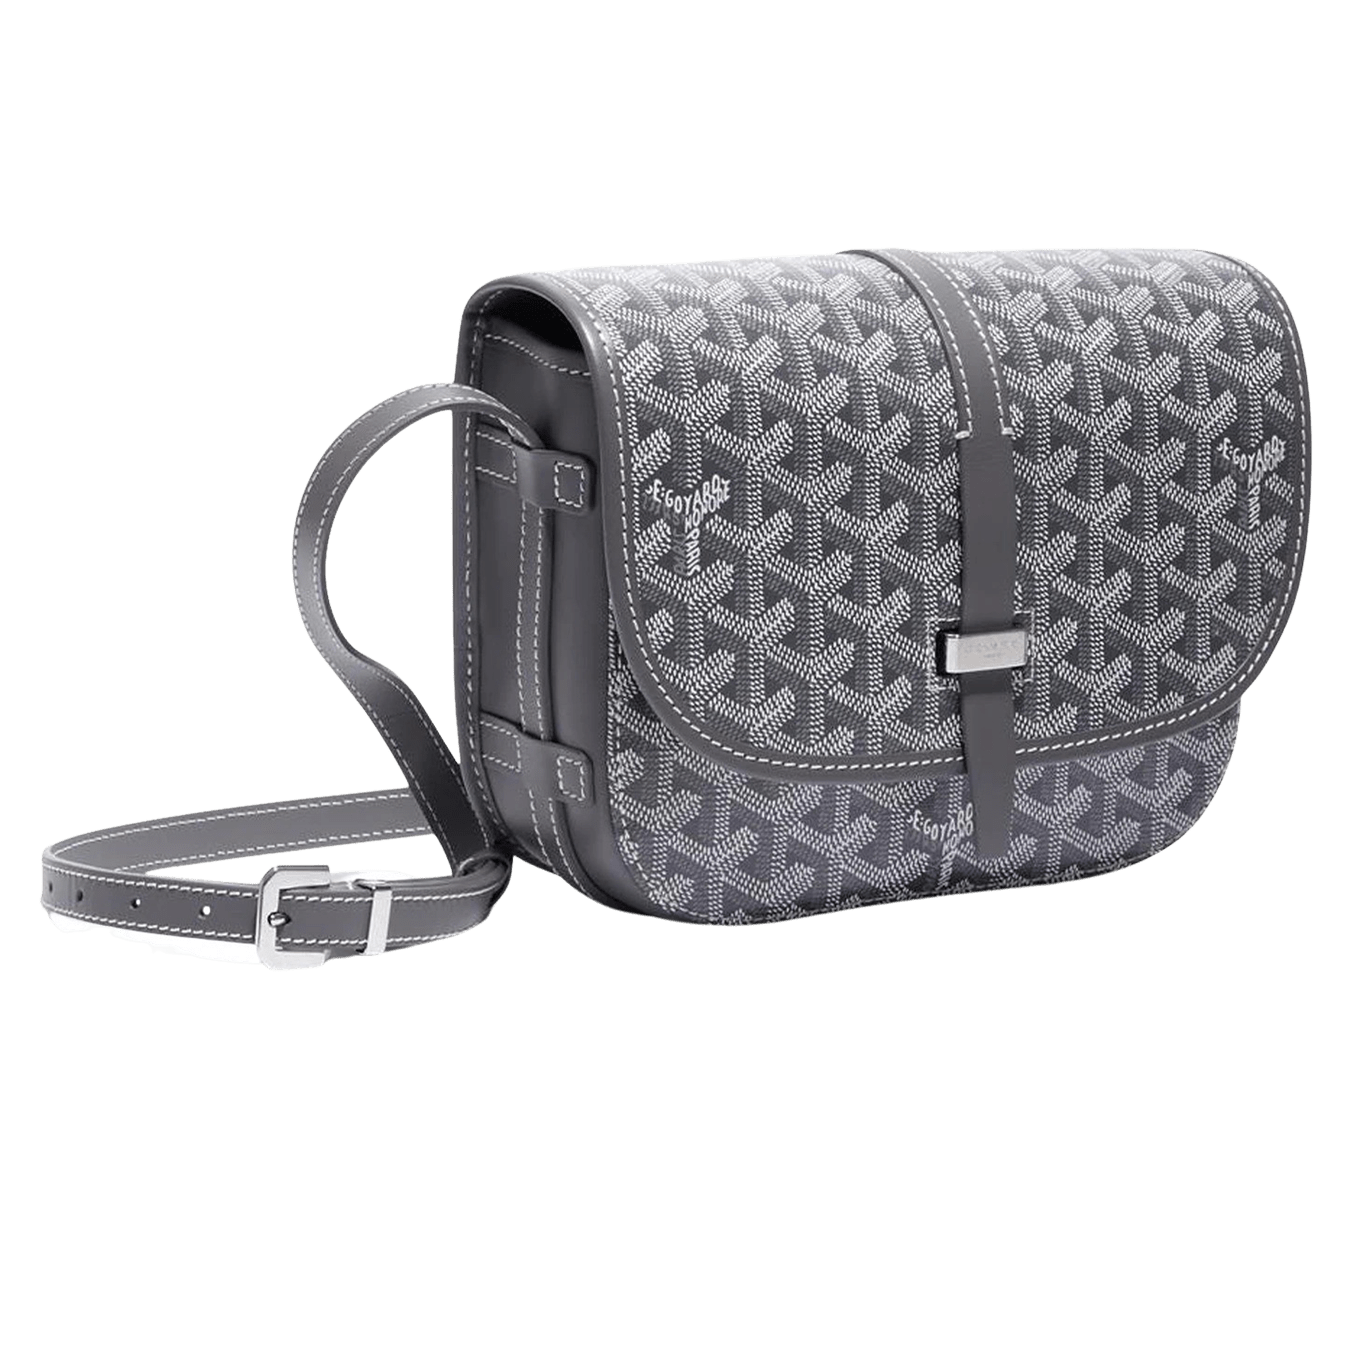 Goyard Belvedere Messenger Bag Review 